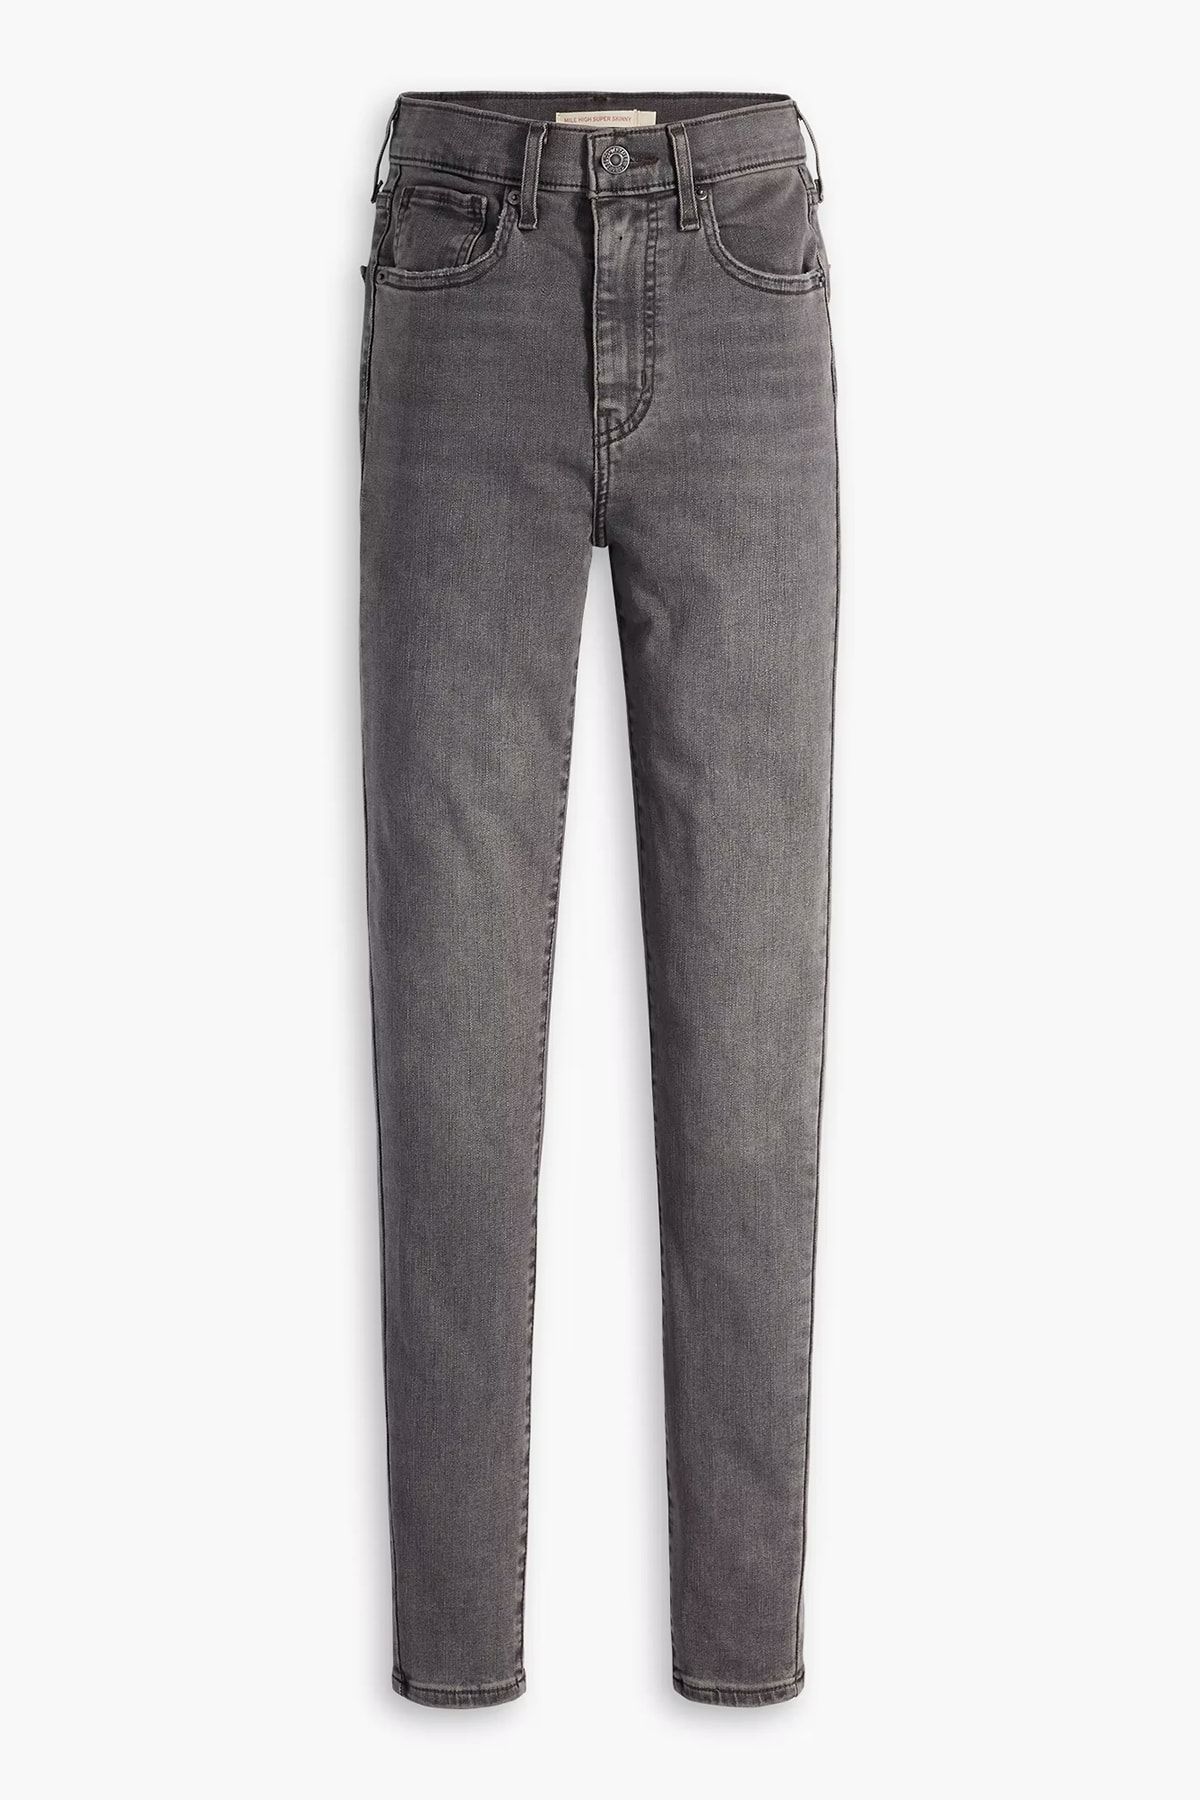 Levi's Pamuklu Mile Yüksek Bel Süper Skinny Jeans Kot Pantolon 22791